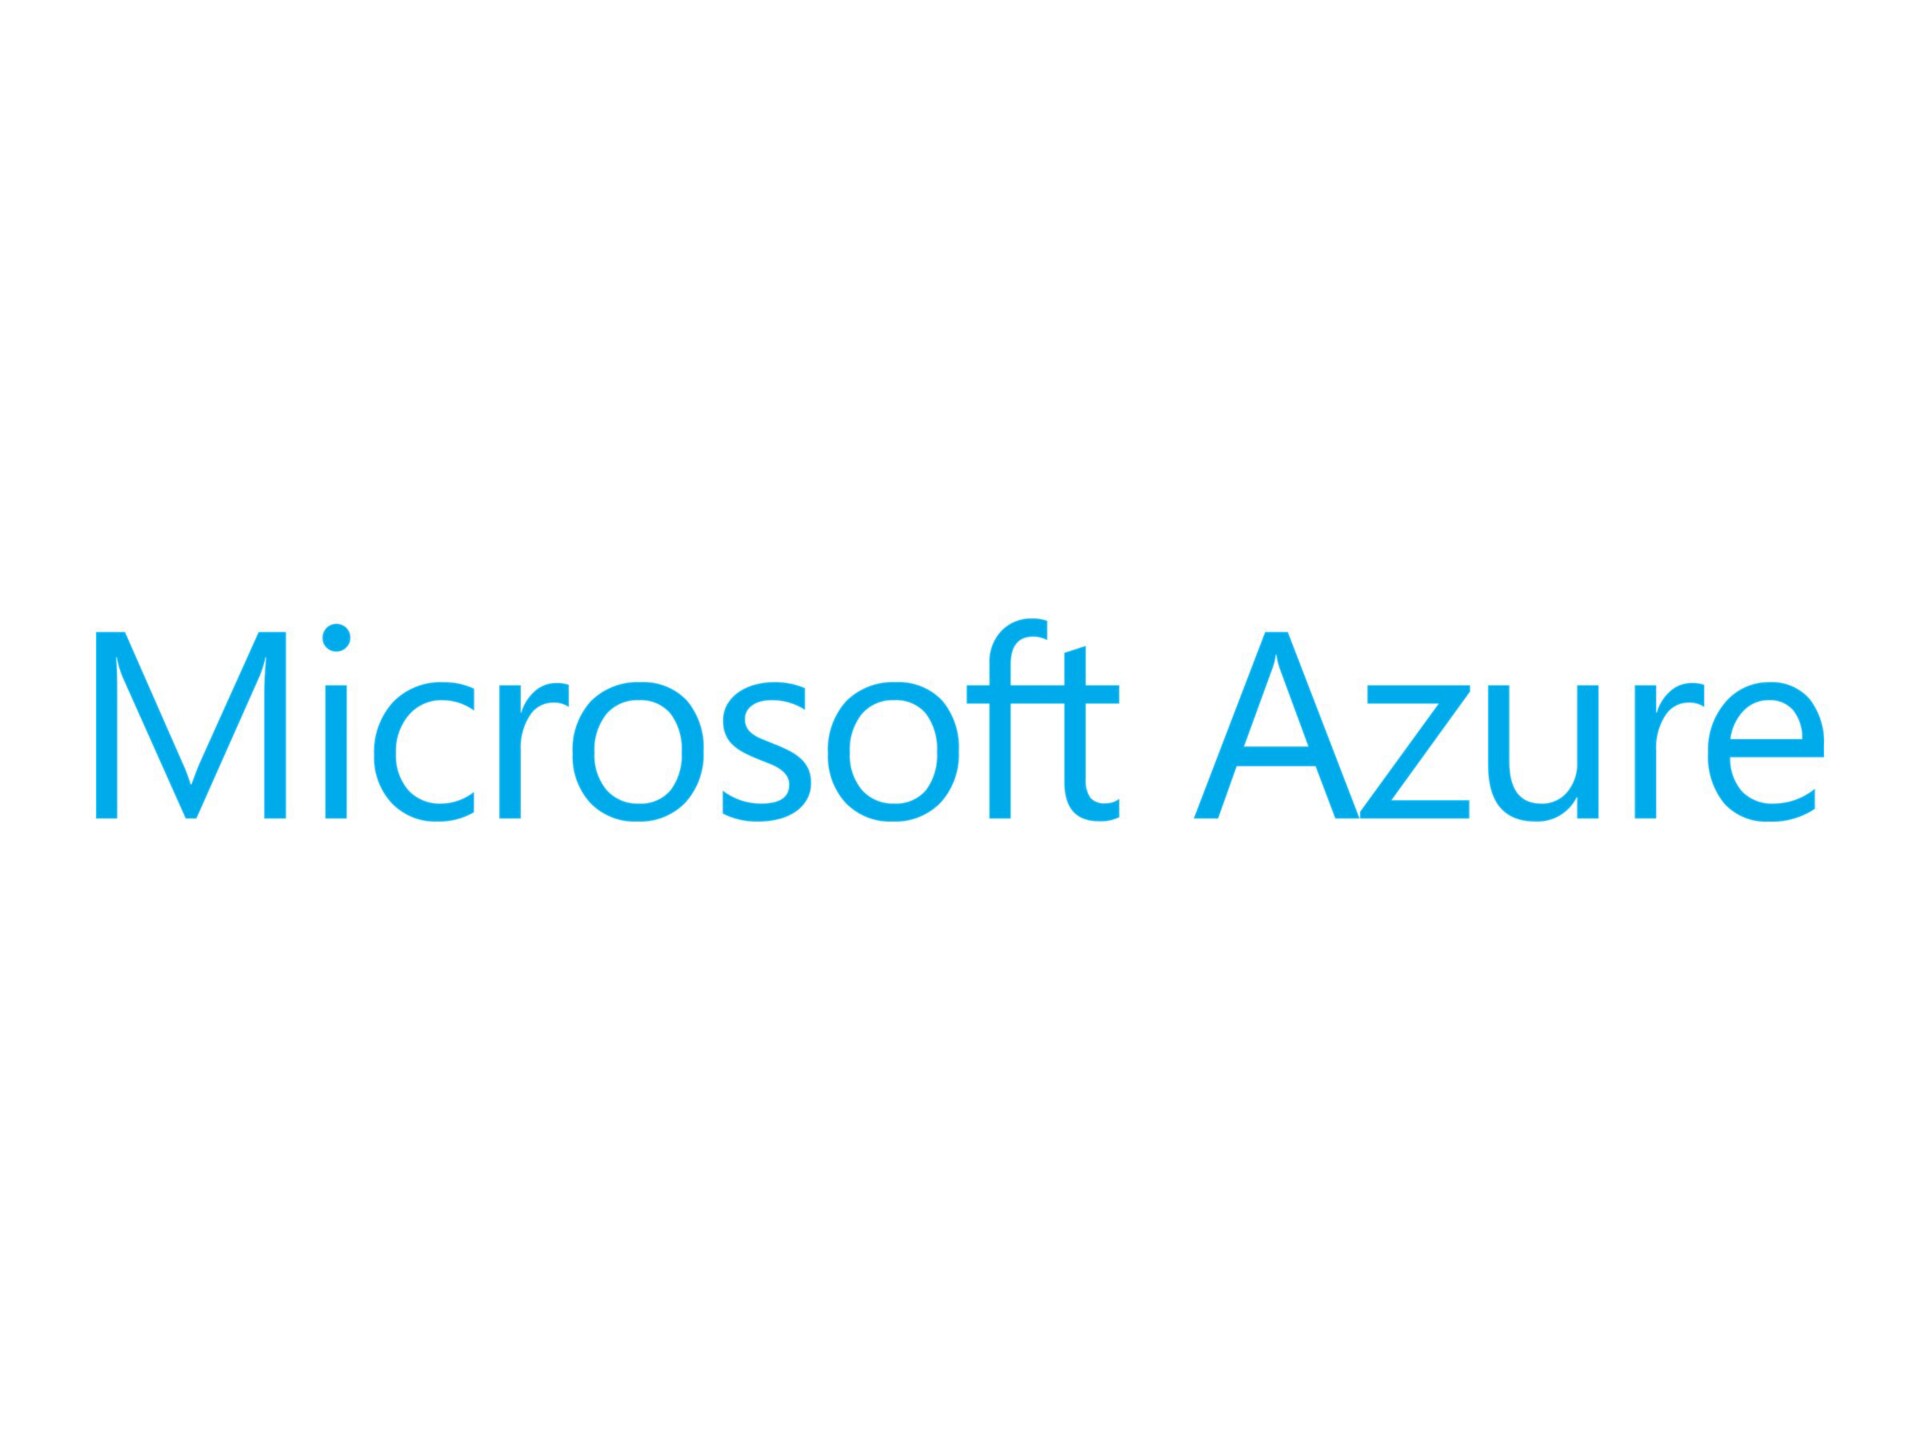 Microsoft Azure Cognitive Services - fee - 10000 faces